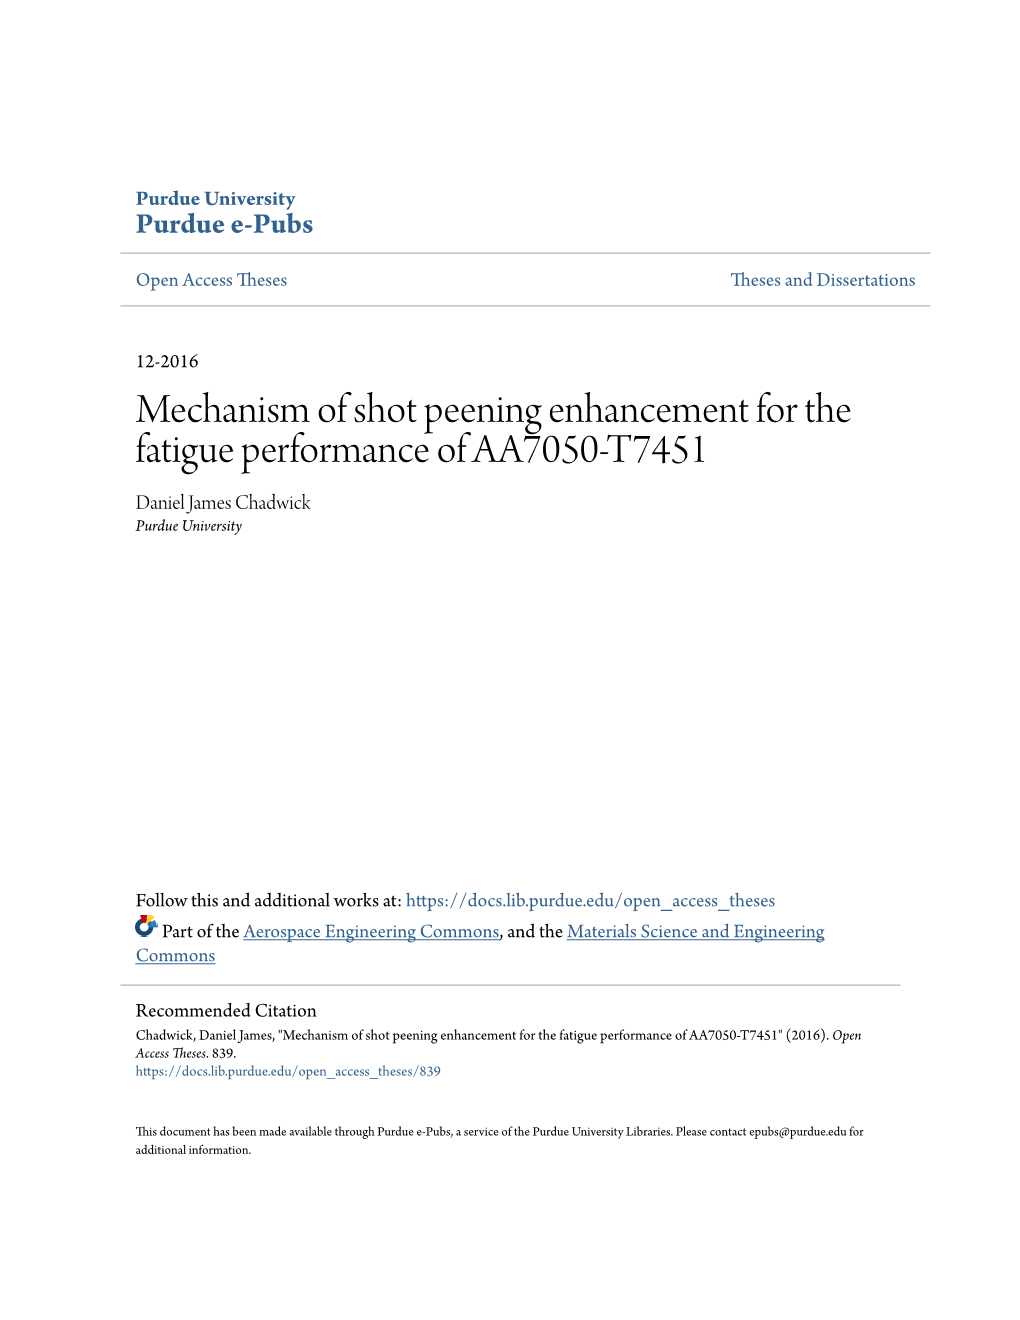 Mechanism of Shot Peening Enhancement for the Fatigue Performance of AA7050-T7451 Daniel James Chadwick Purdue University